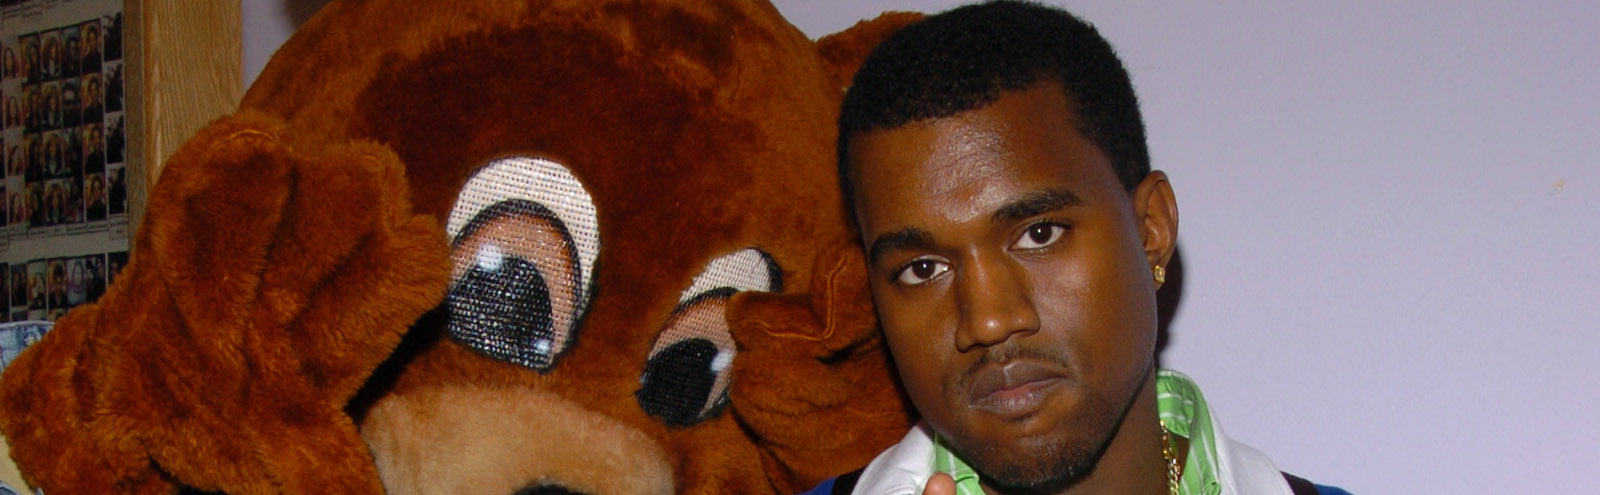 Ye Kanye West MTV TRL 2004